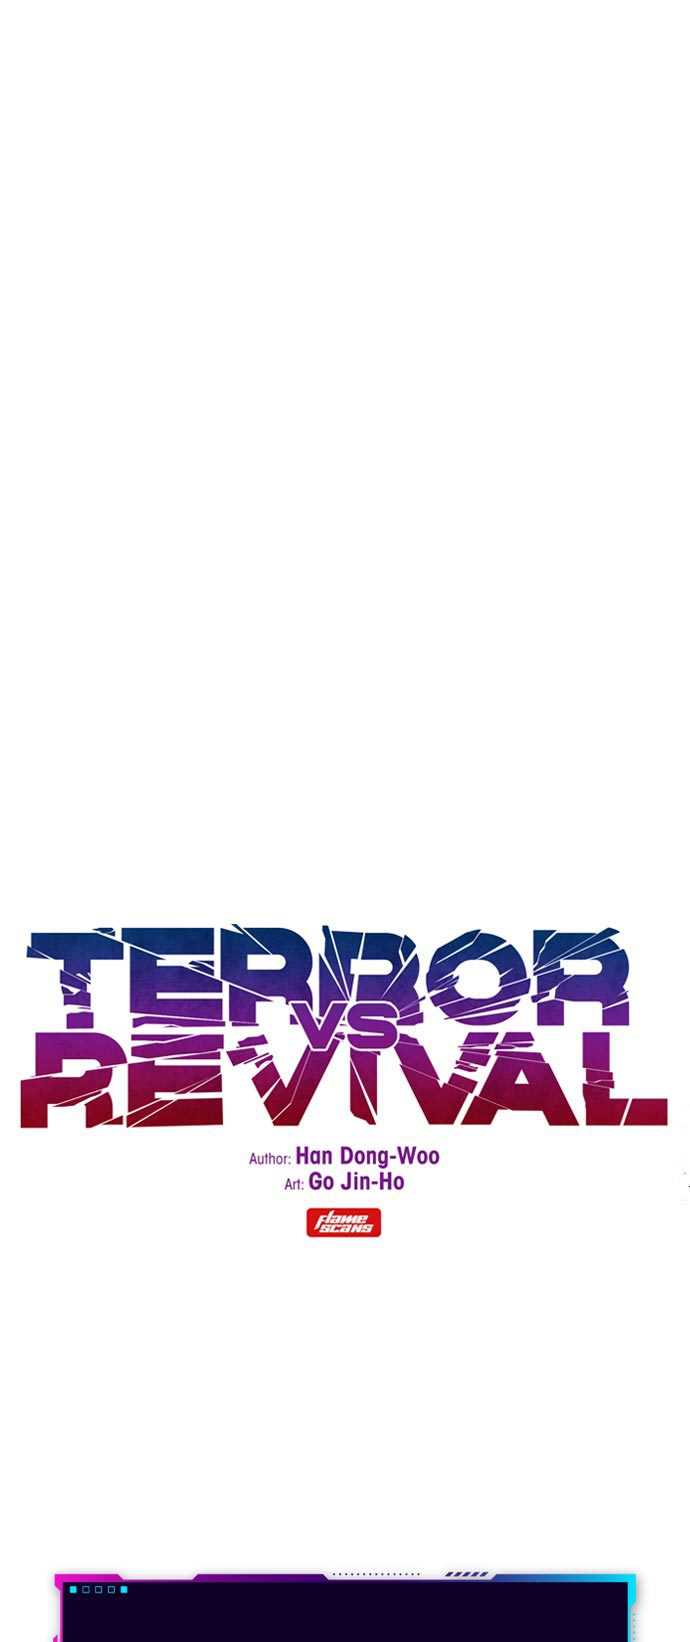 Terror Man vs Revival Man Chapter 17